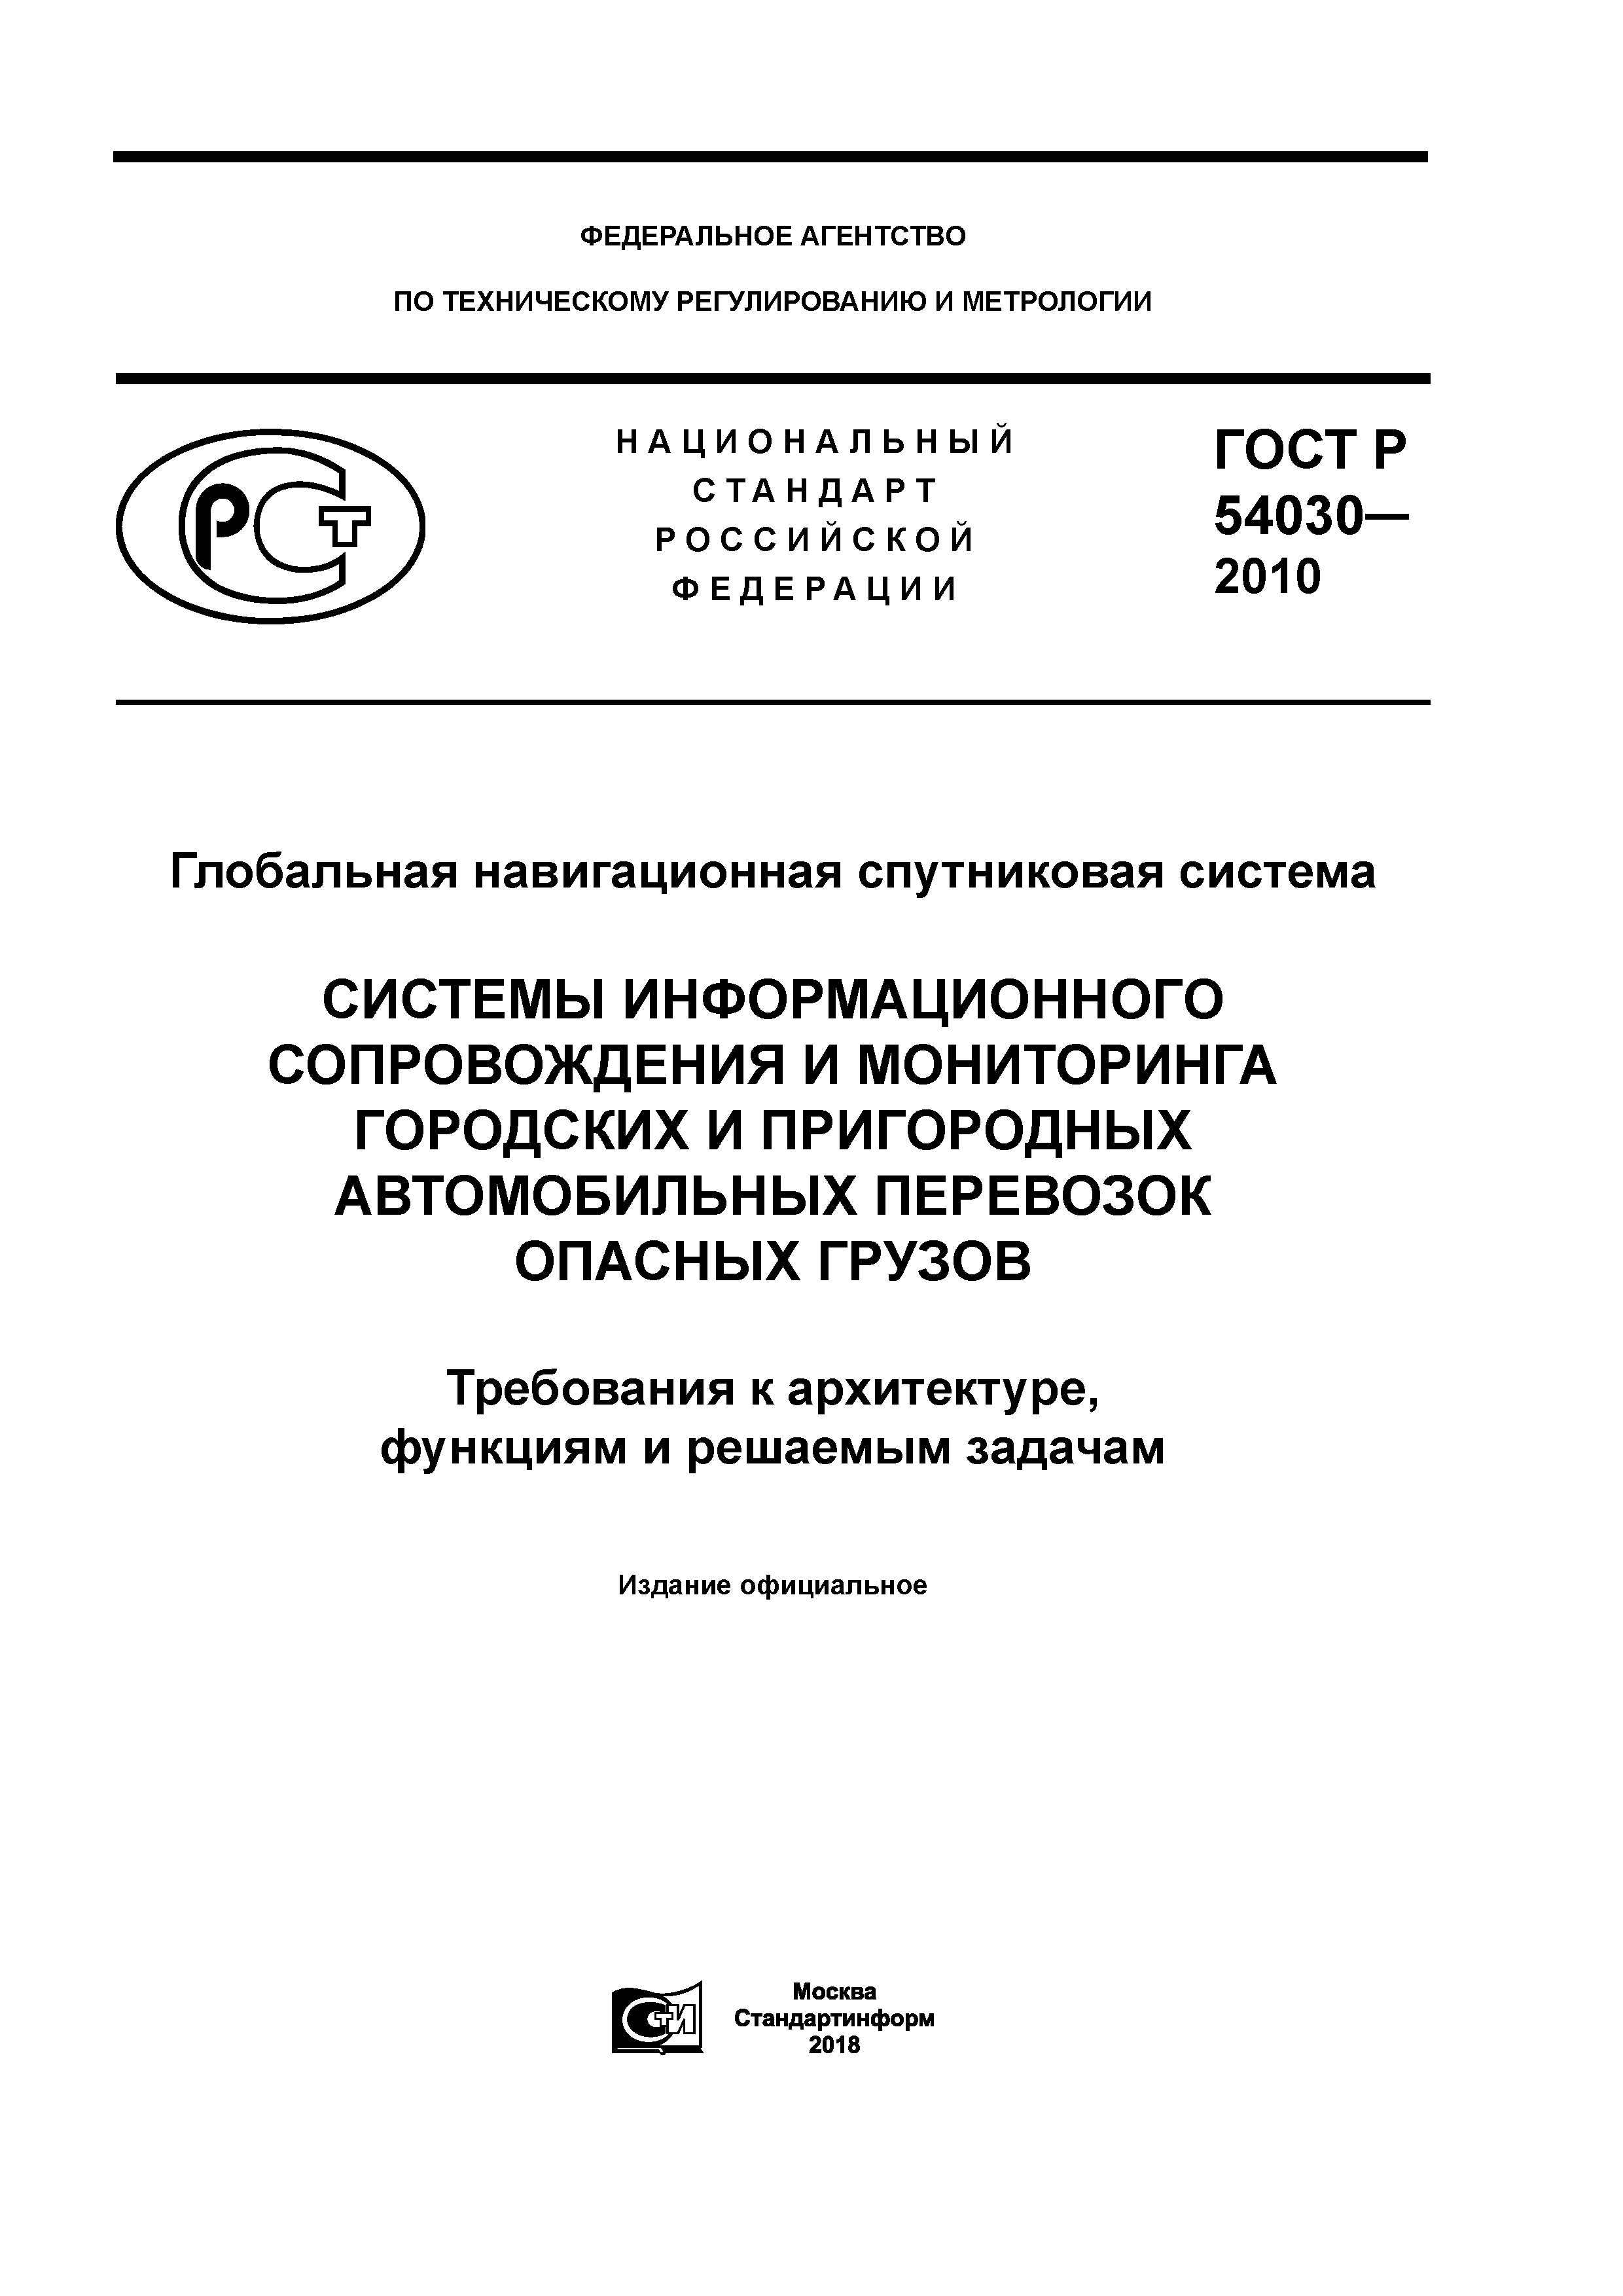 ГОСТ Р 54030-2010